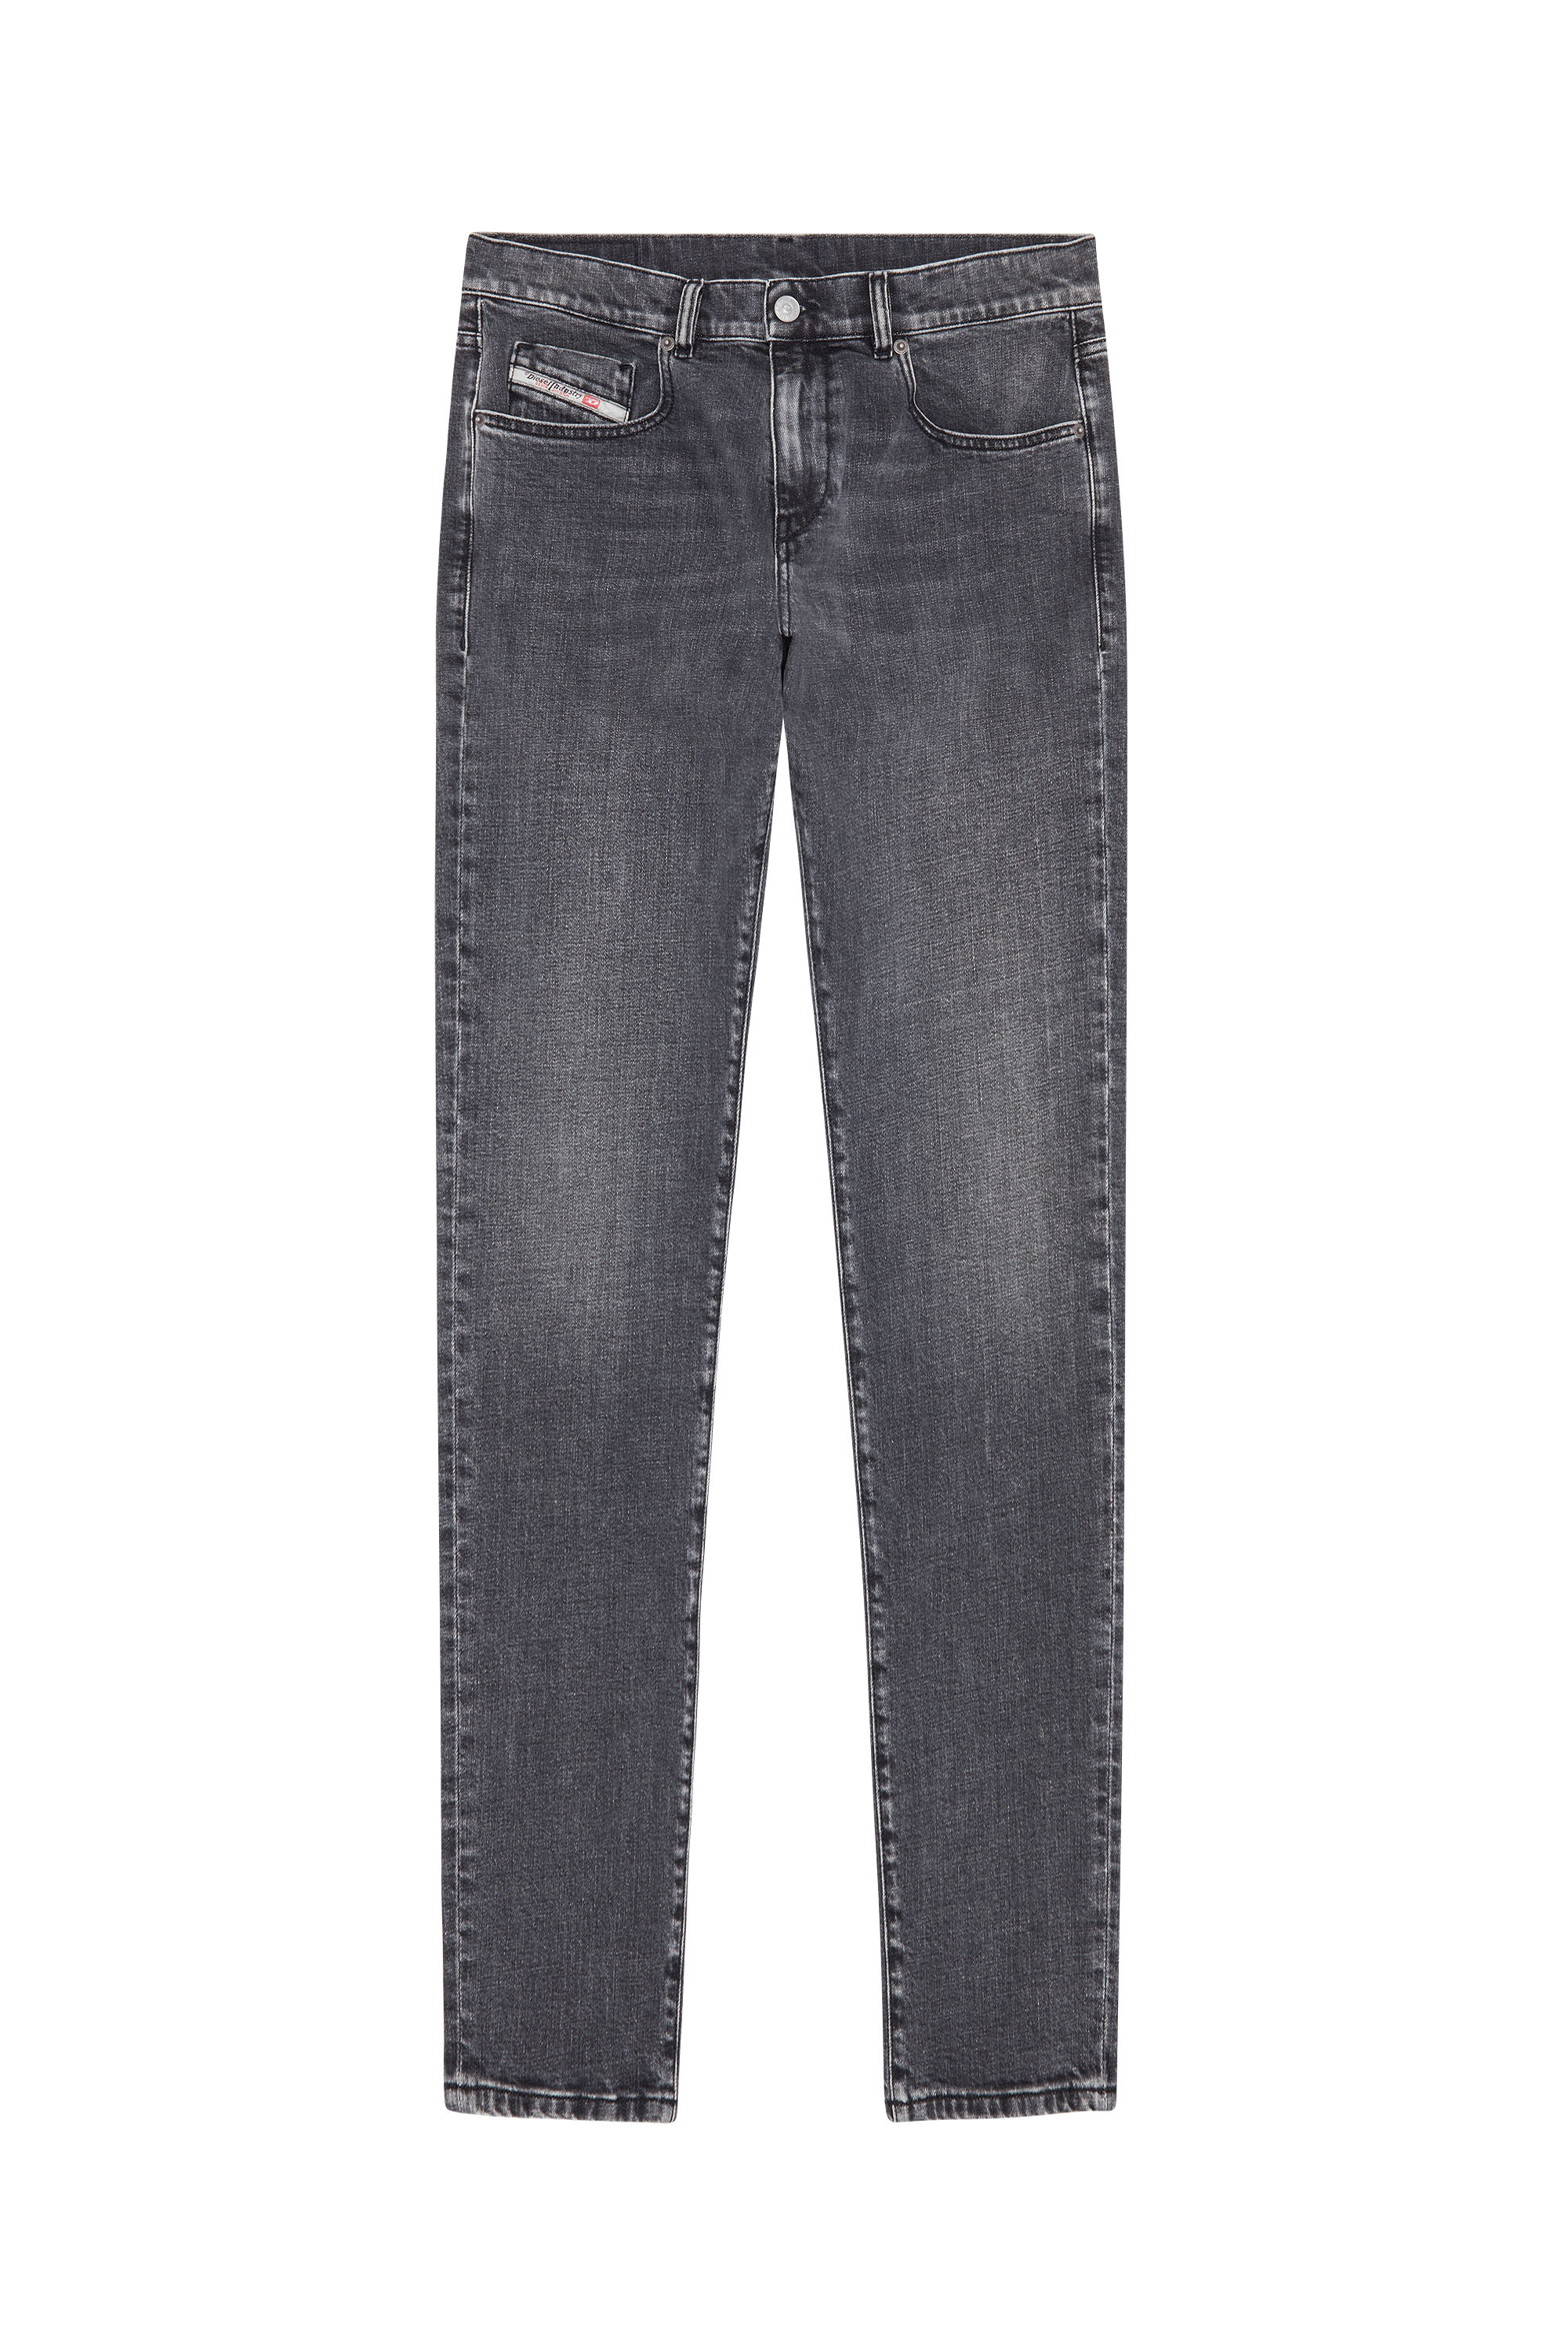 Slim Jeans 2019 D-Strukt 09C47, Schwarz/Dunkelgrau - Jeans